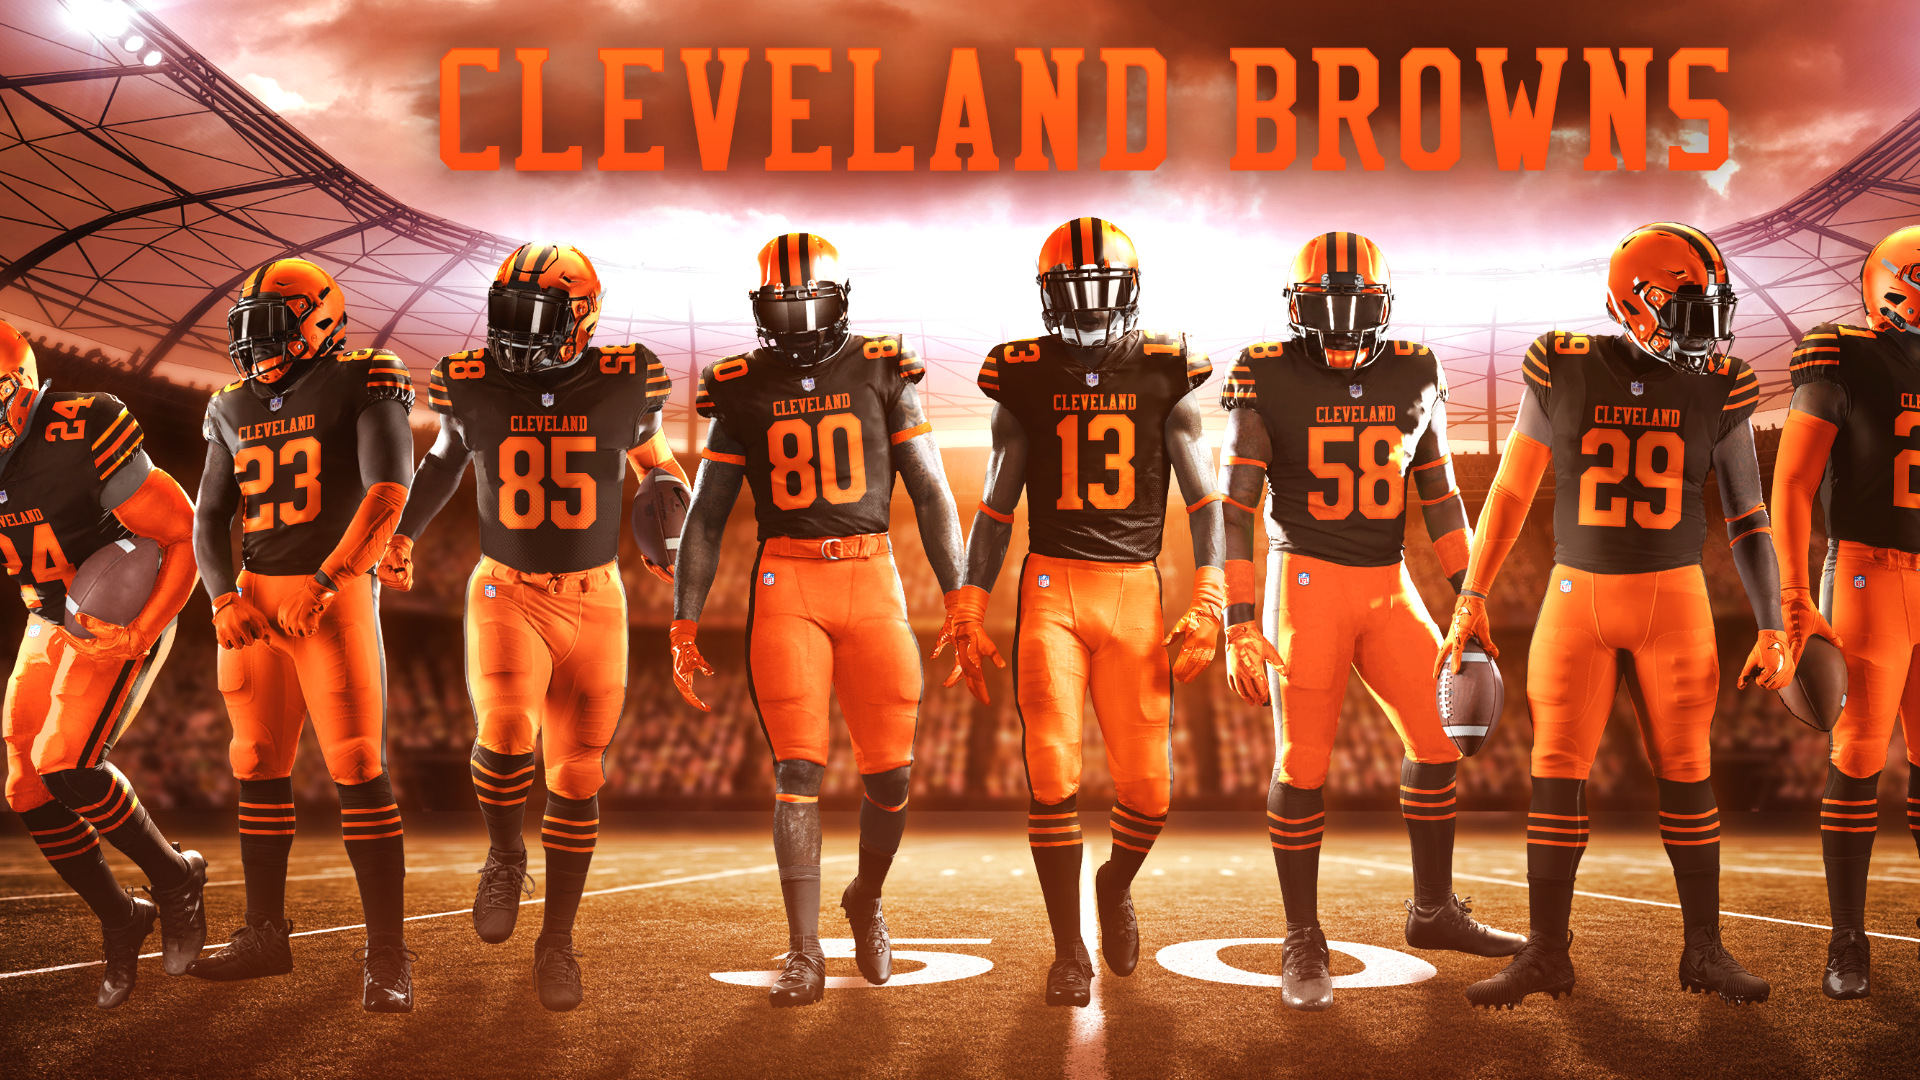 Cleveland Browns' Wallpaper